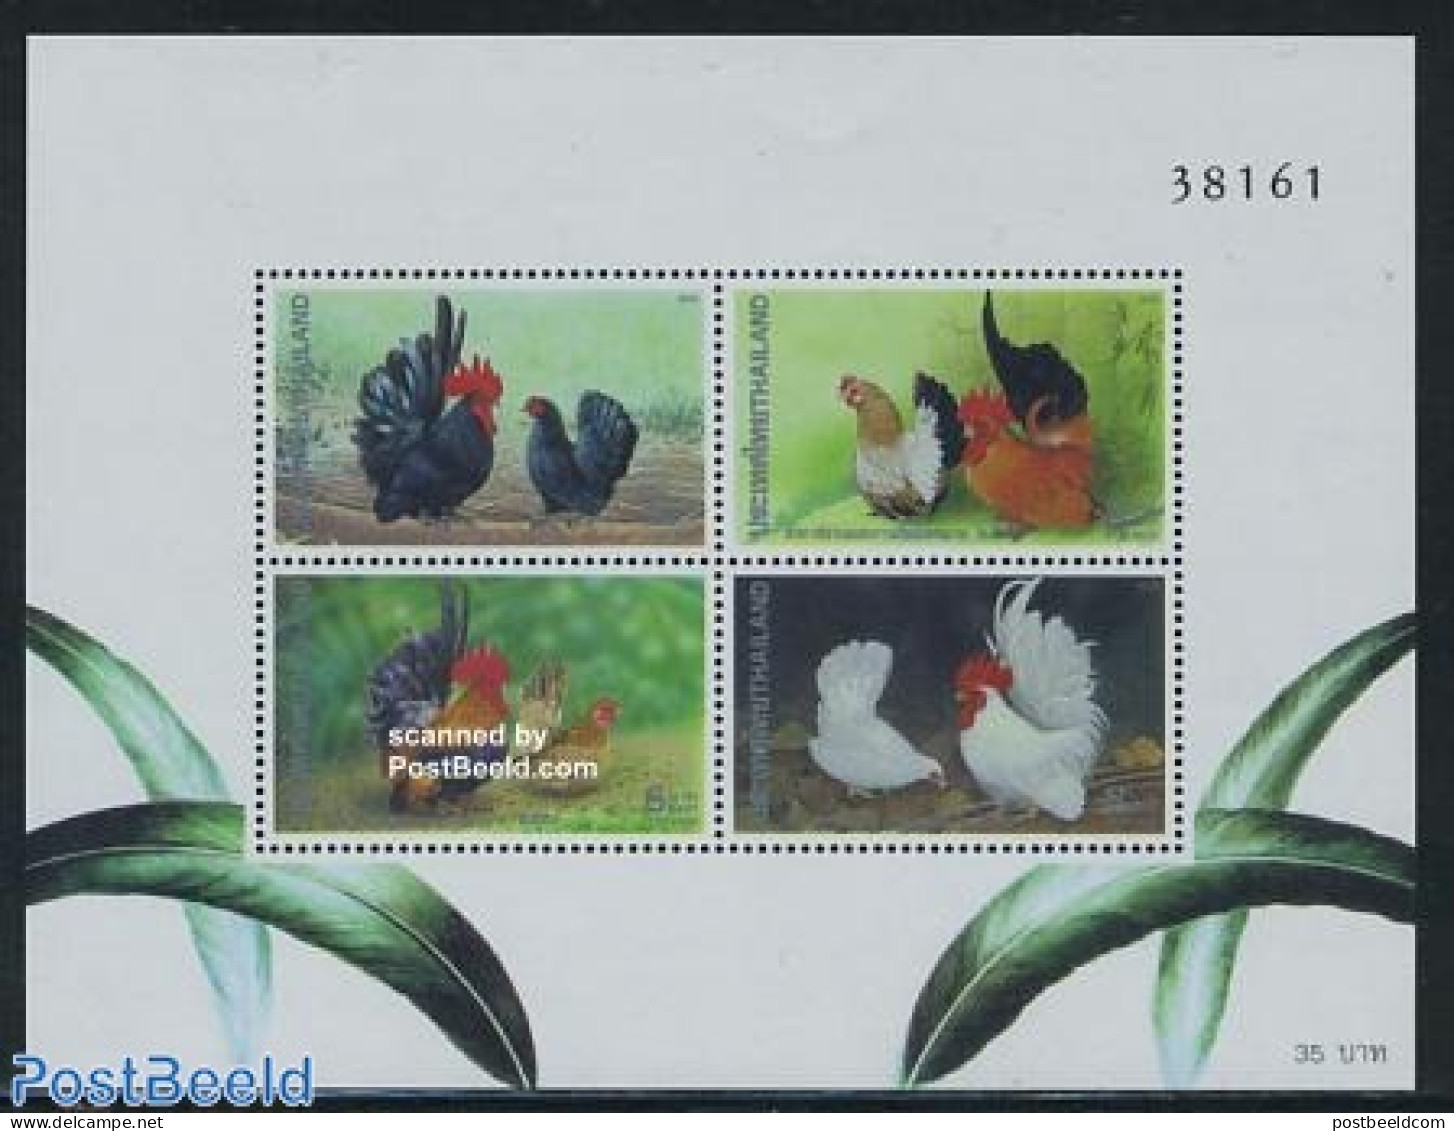 Thailand 1991 Chicken S/s, Mint NH, Nature - Birds - Poultry - Thaïlande